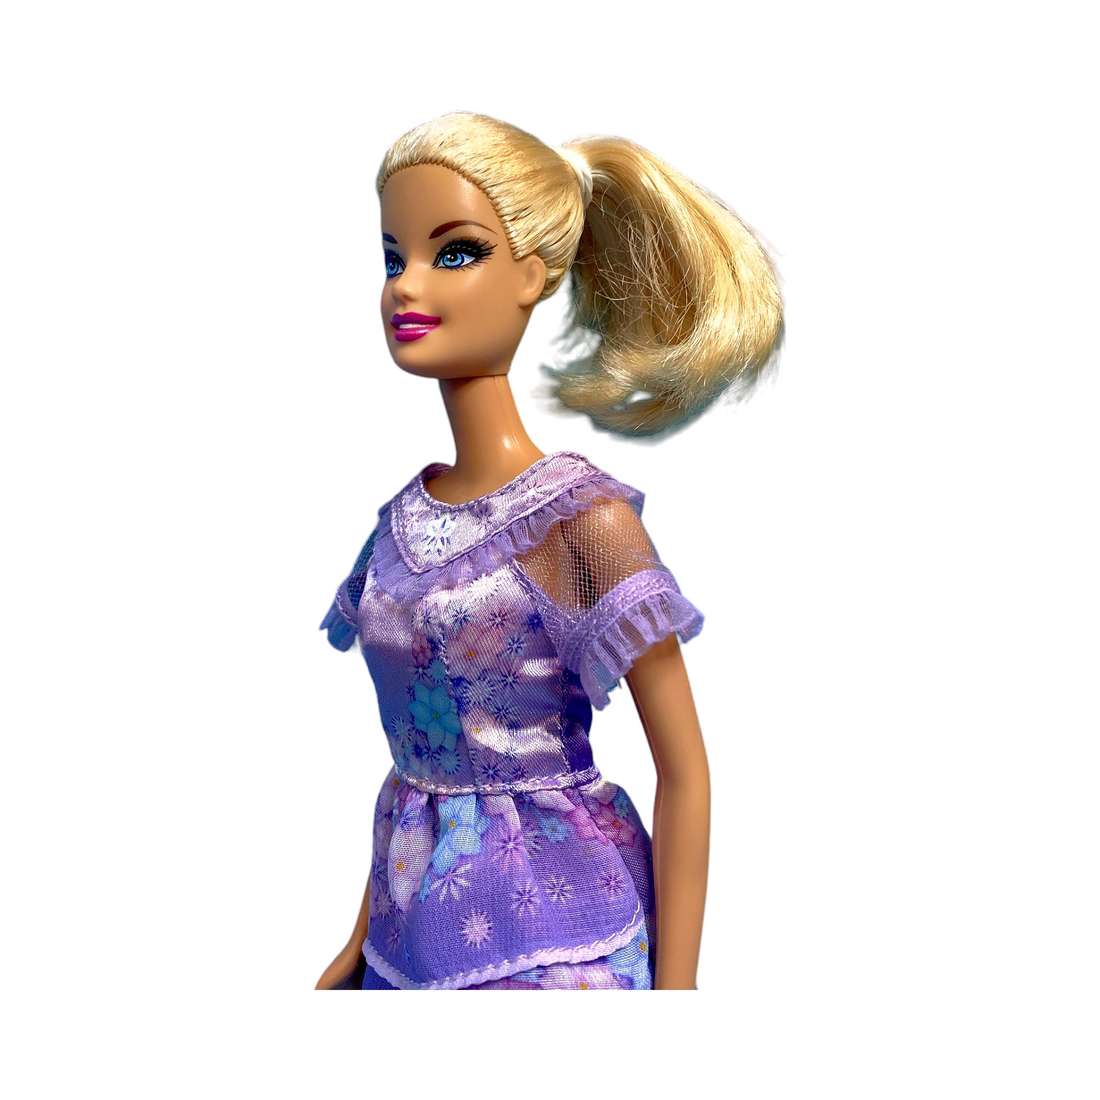 Barbie blonde  - Robe violette